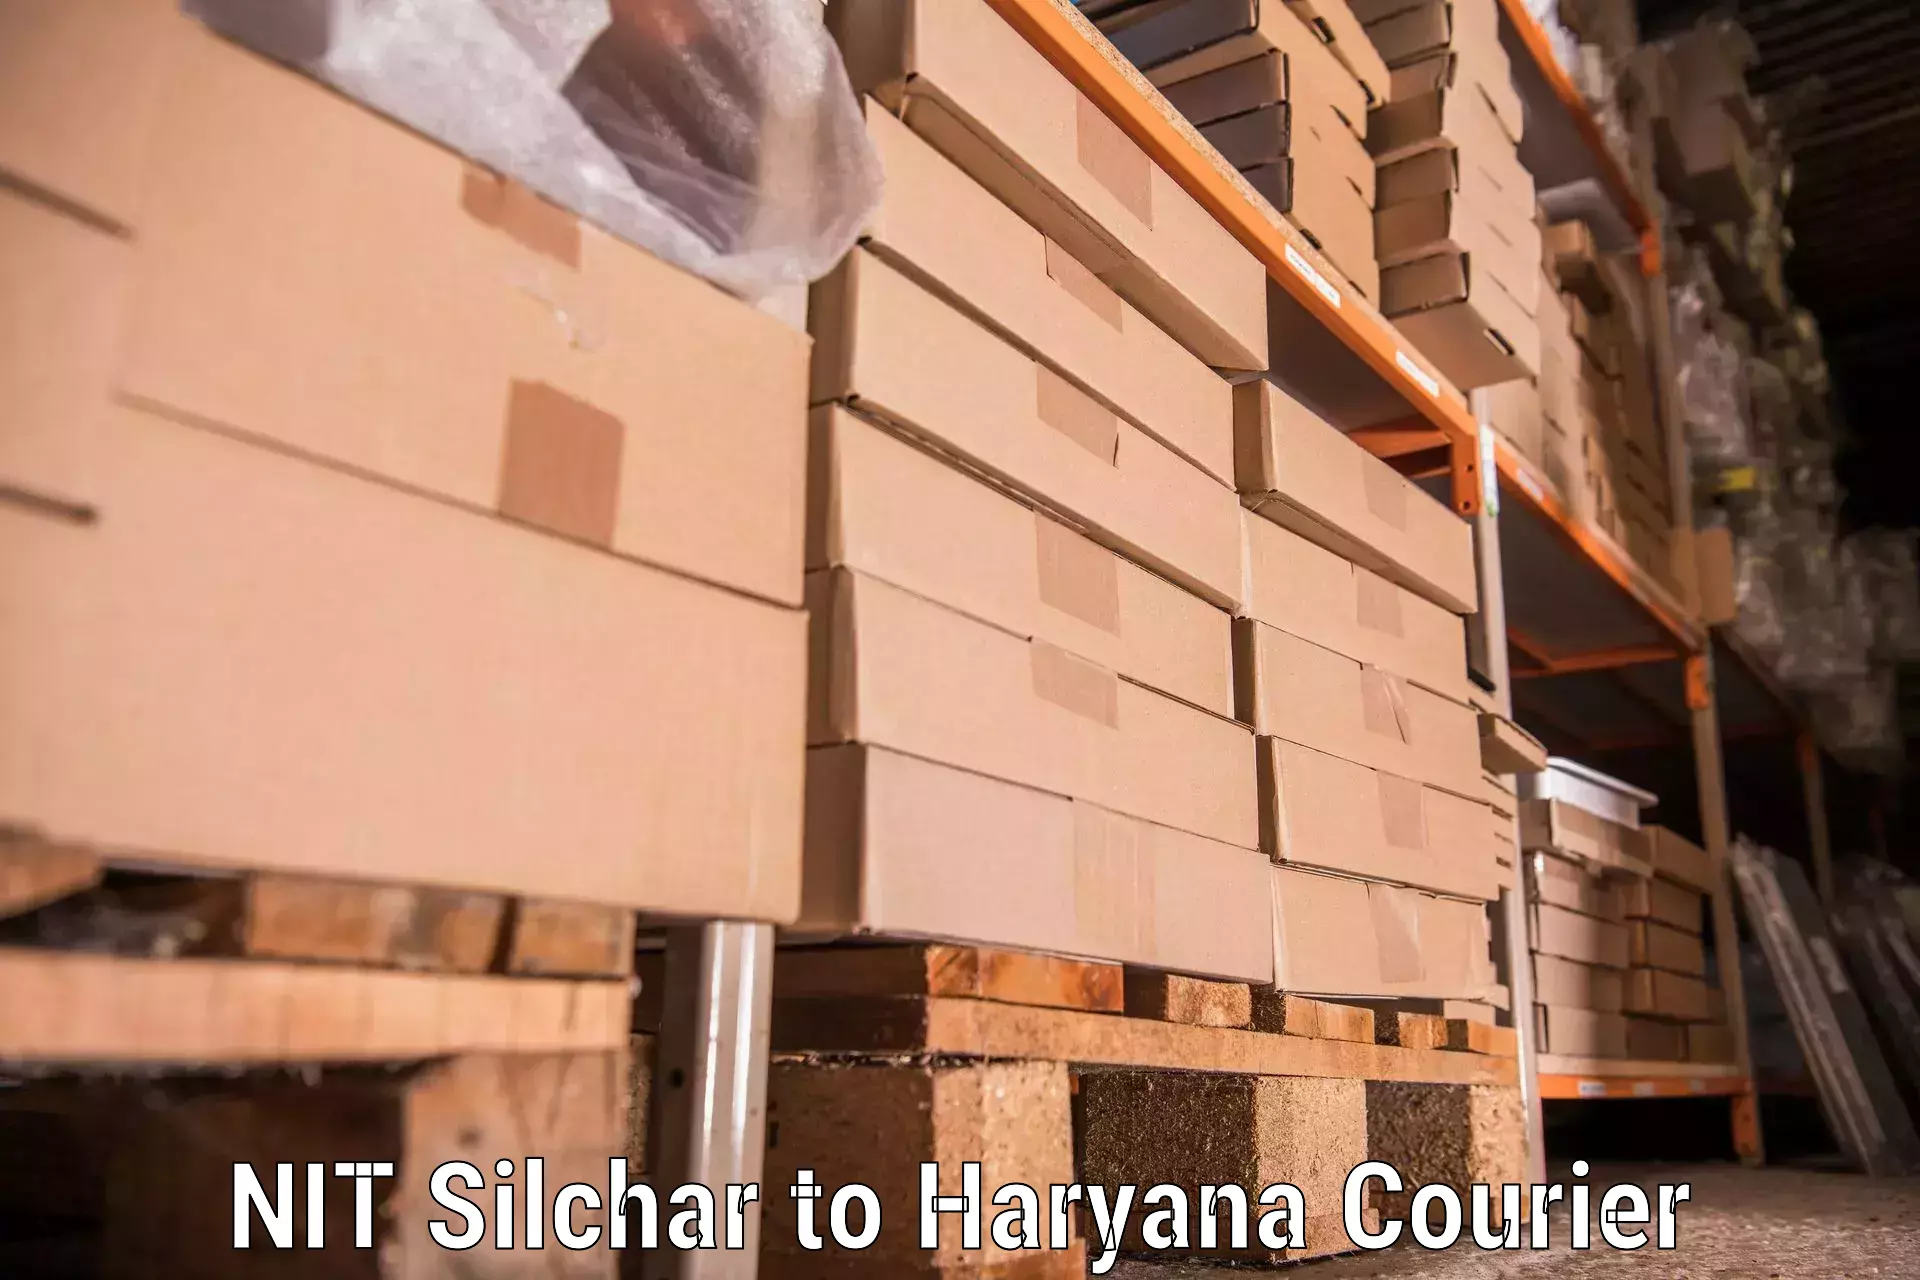 Furniture moving experts NIT Silchar to Loharu